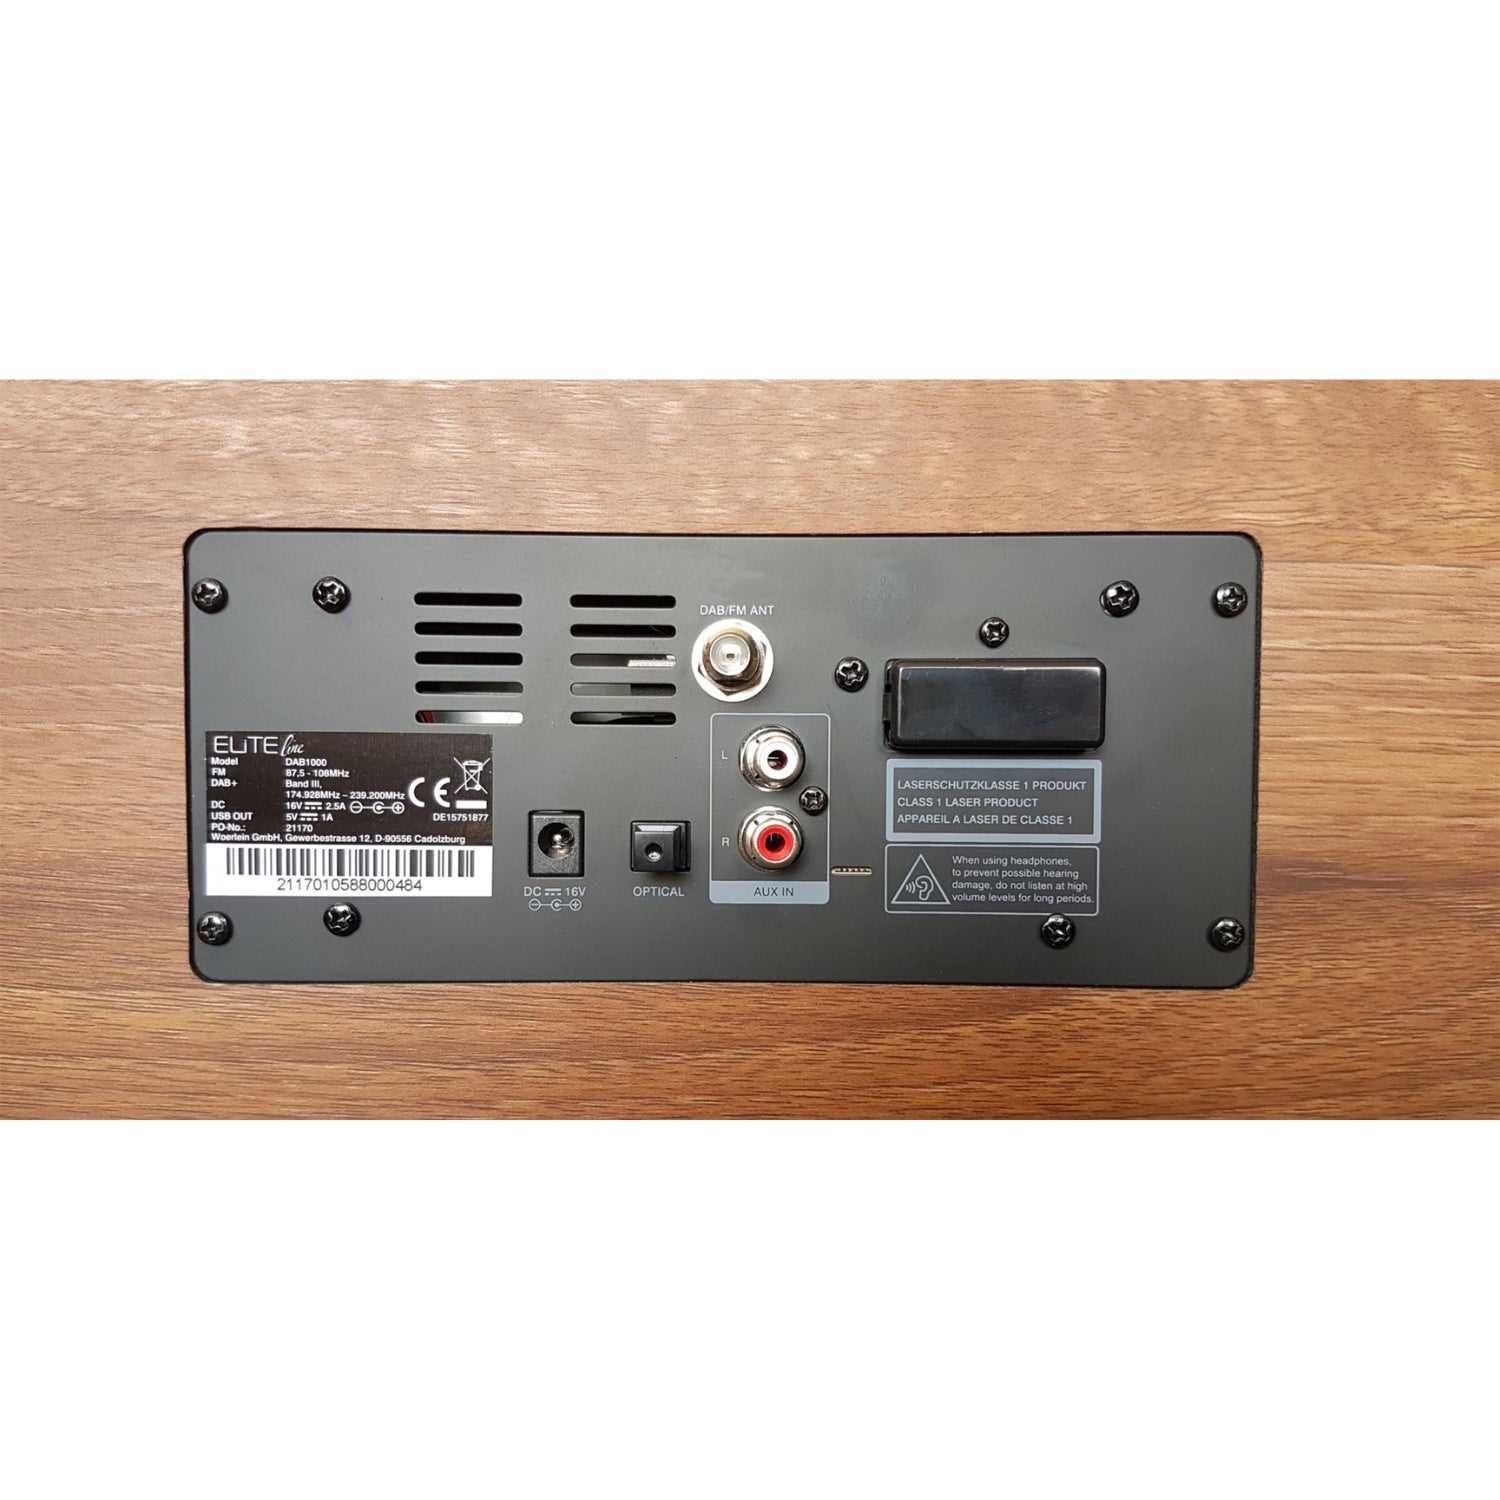 Soundmaster HighLine DAB1000 système stéréo système HiFi DAB + FM CD MP3 USB Bluetooth streaming entrée optique antenne 75 ohms